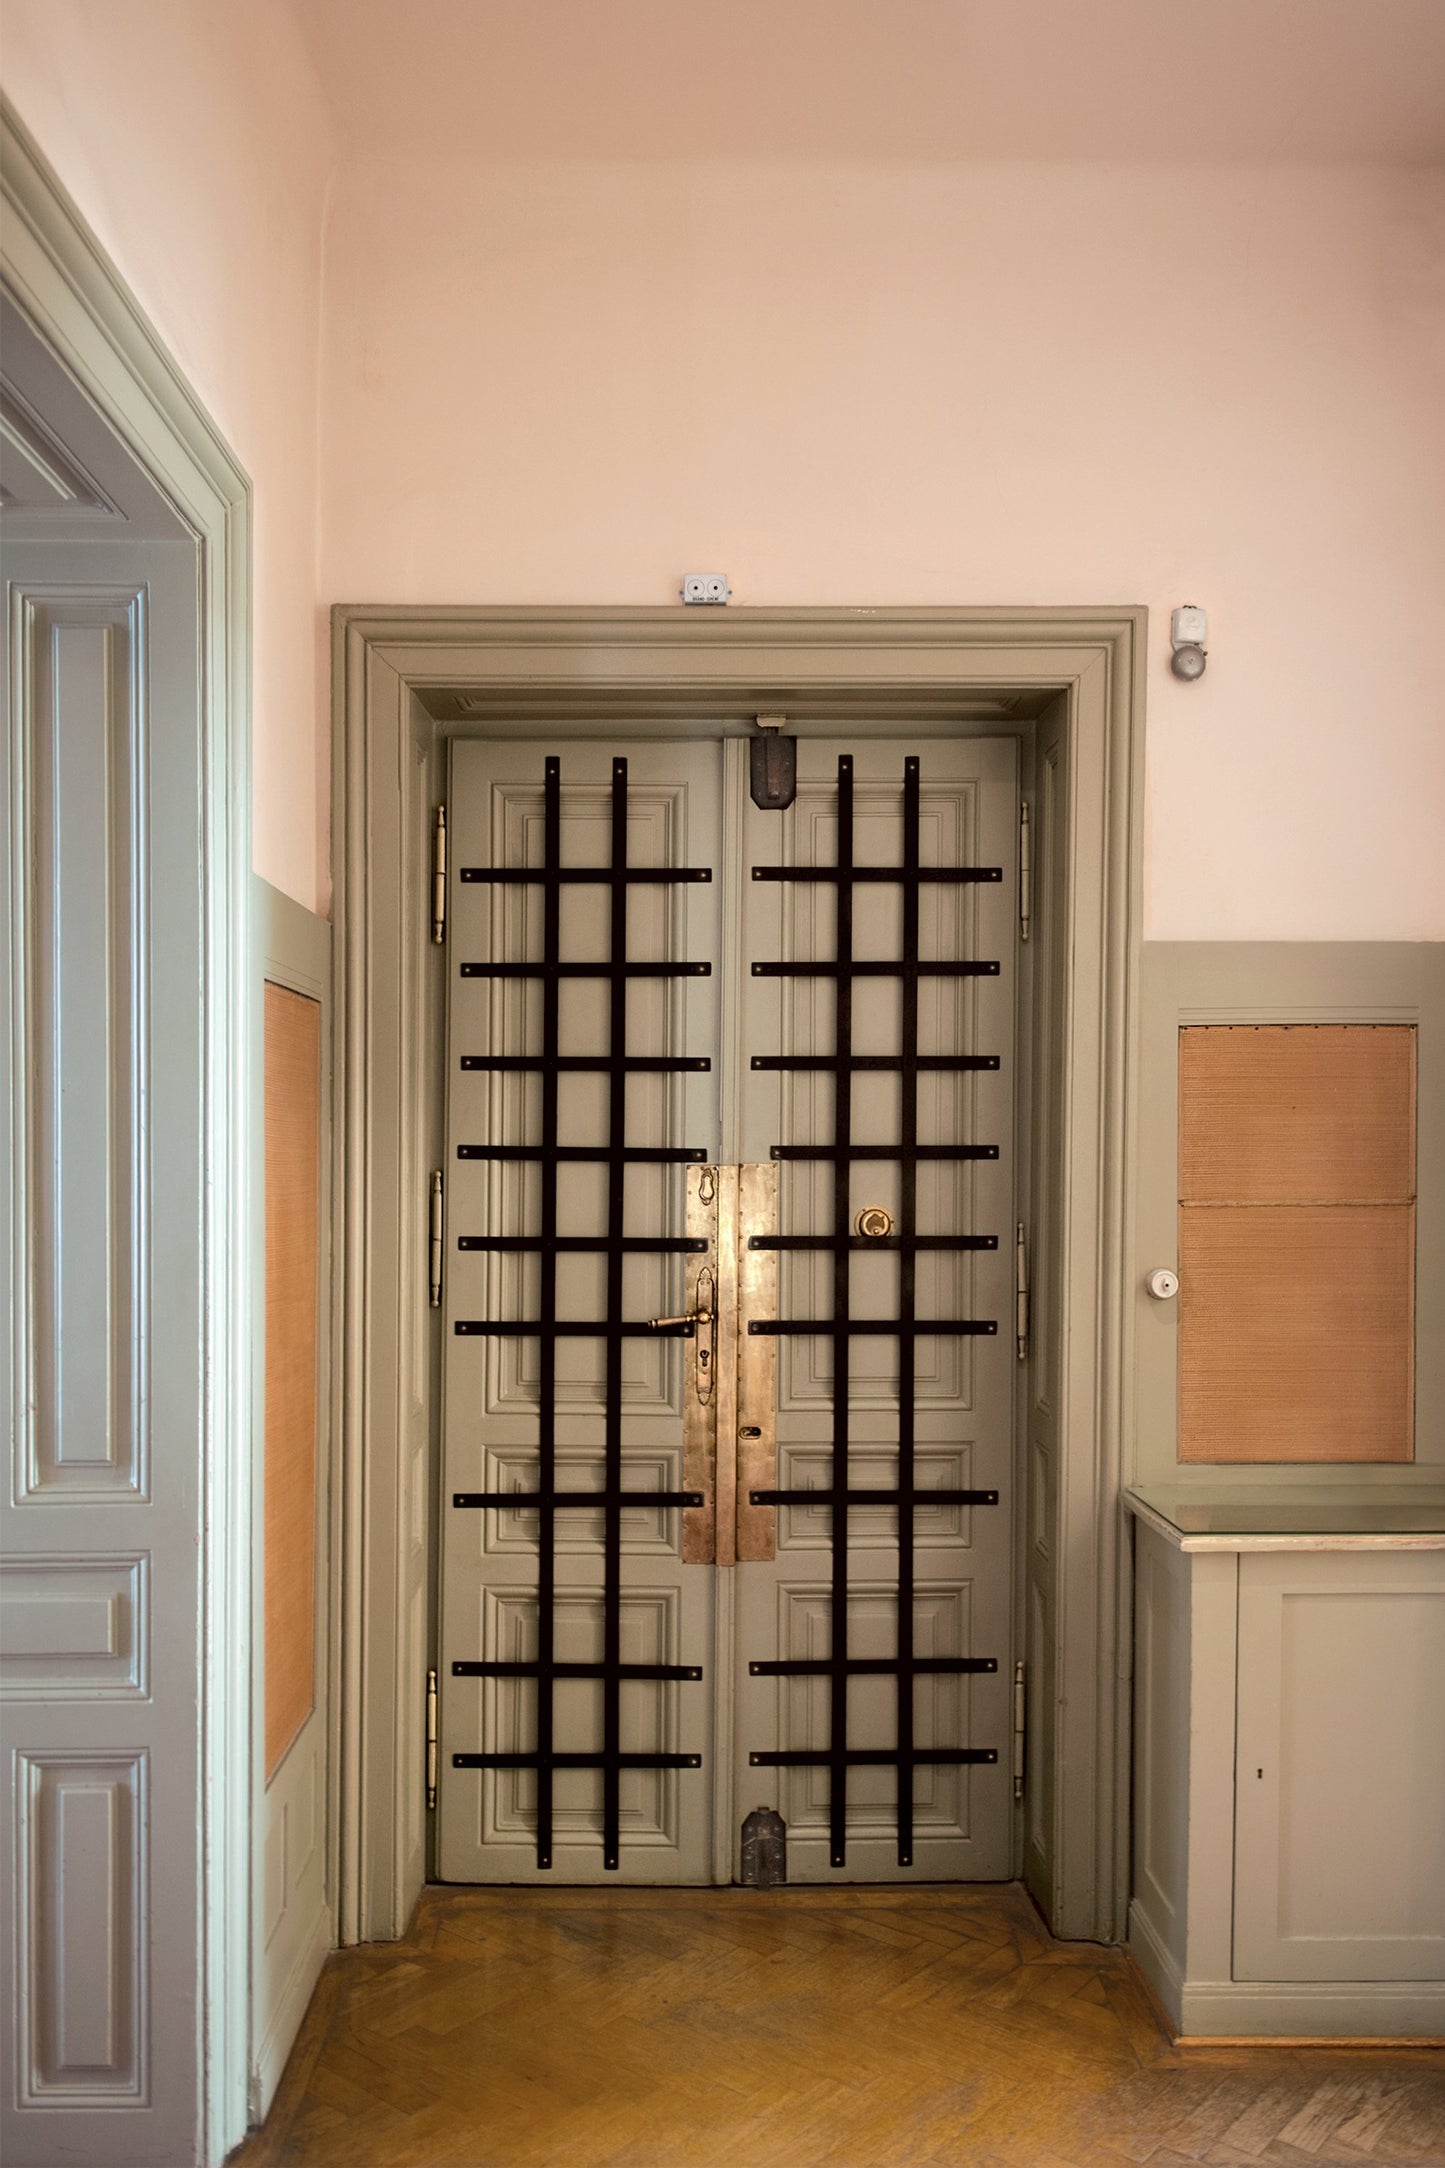 Barred Door in Vestibule, Freud's Office, Berggasse 19, Vienna